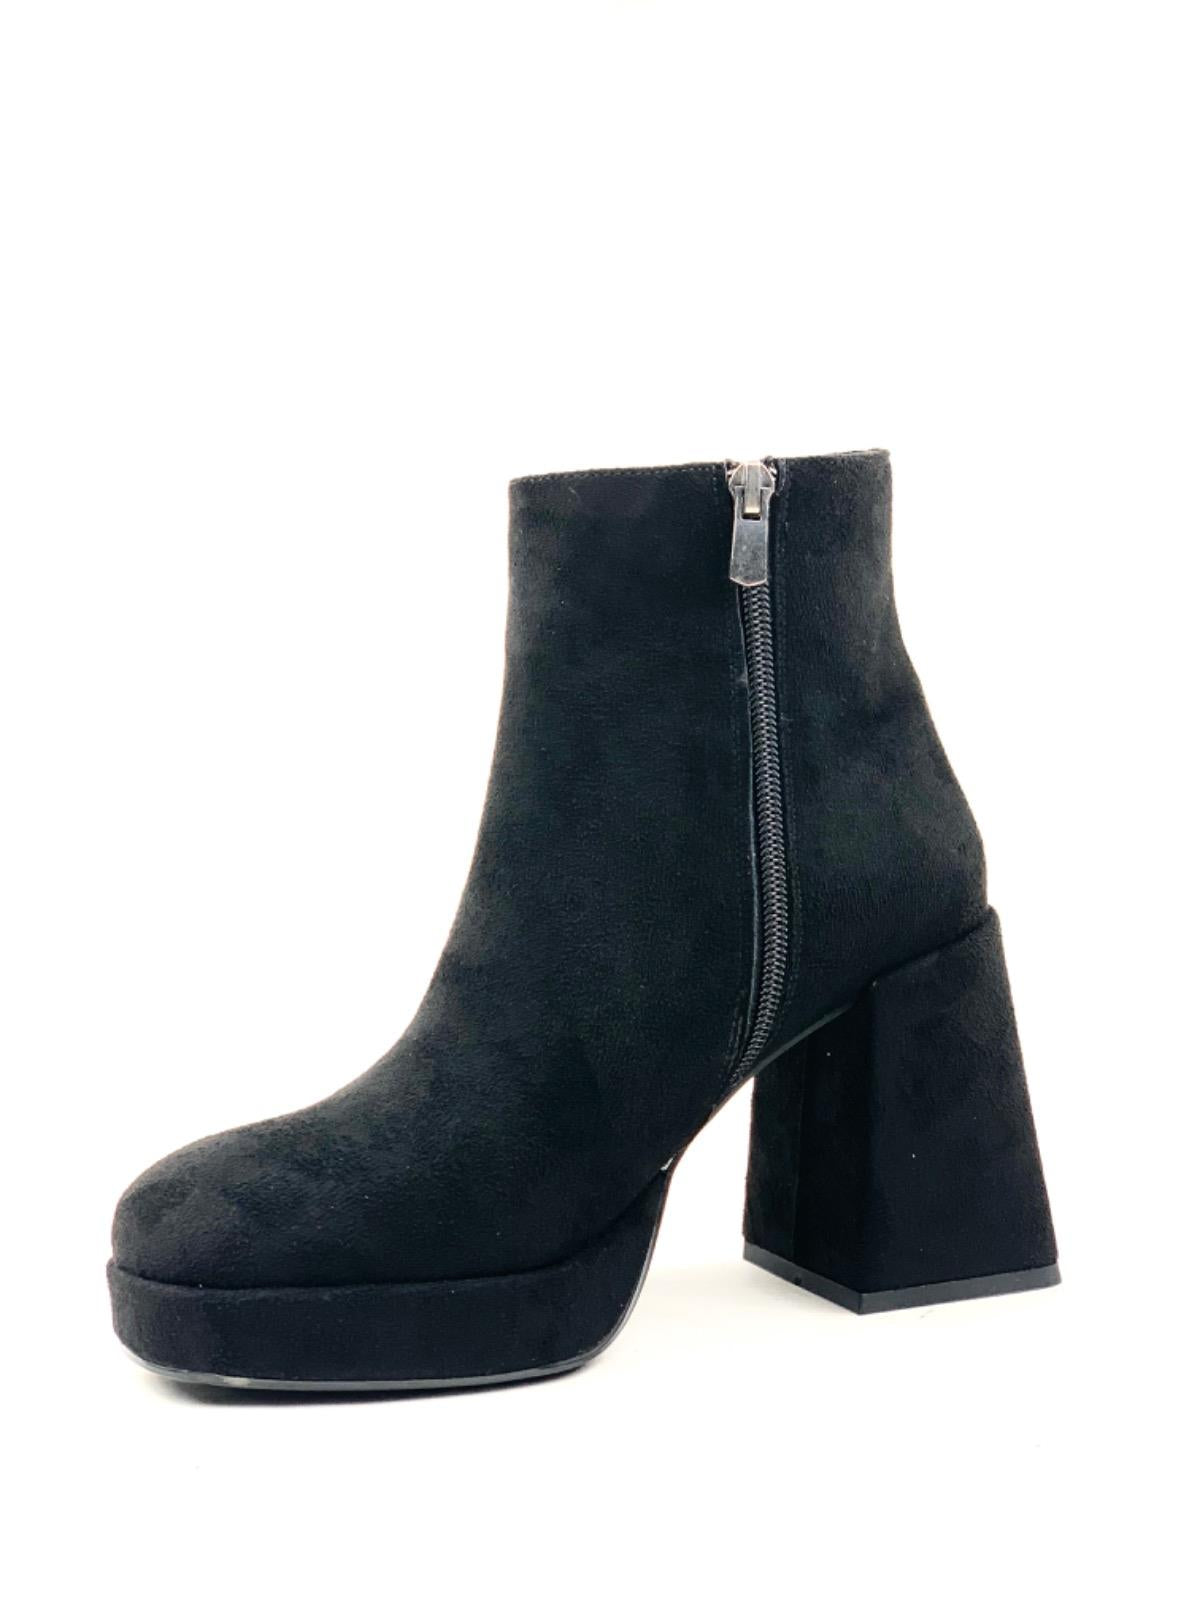 Women's Sand Black Platform Heeled Short Suede Boots - STREETMODE ™